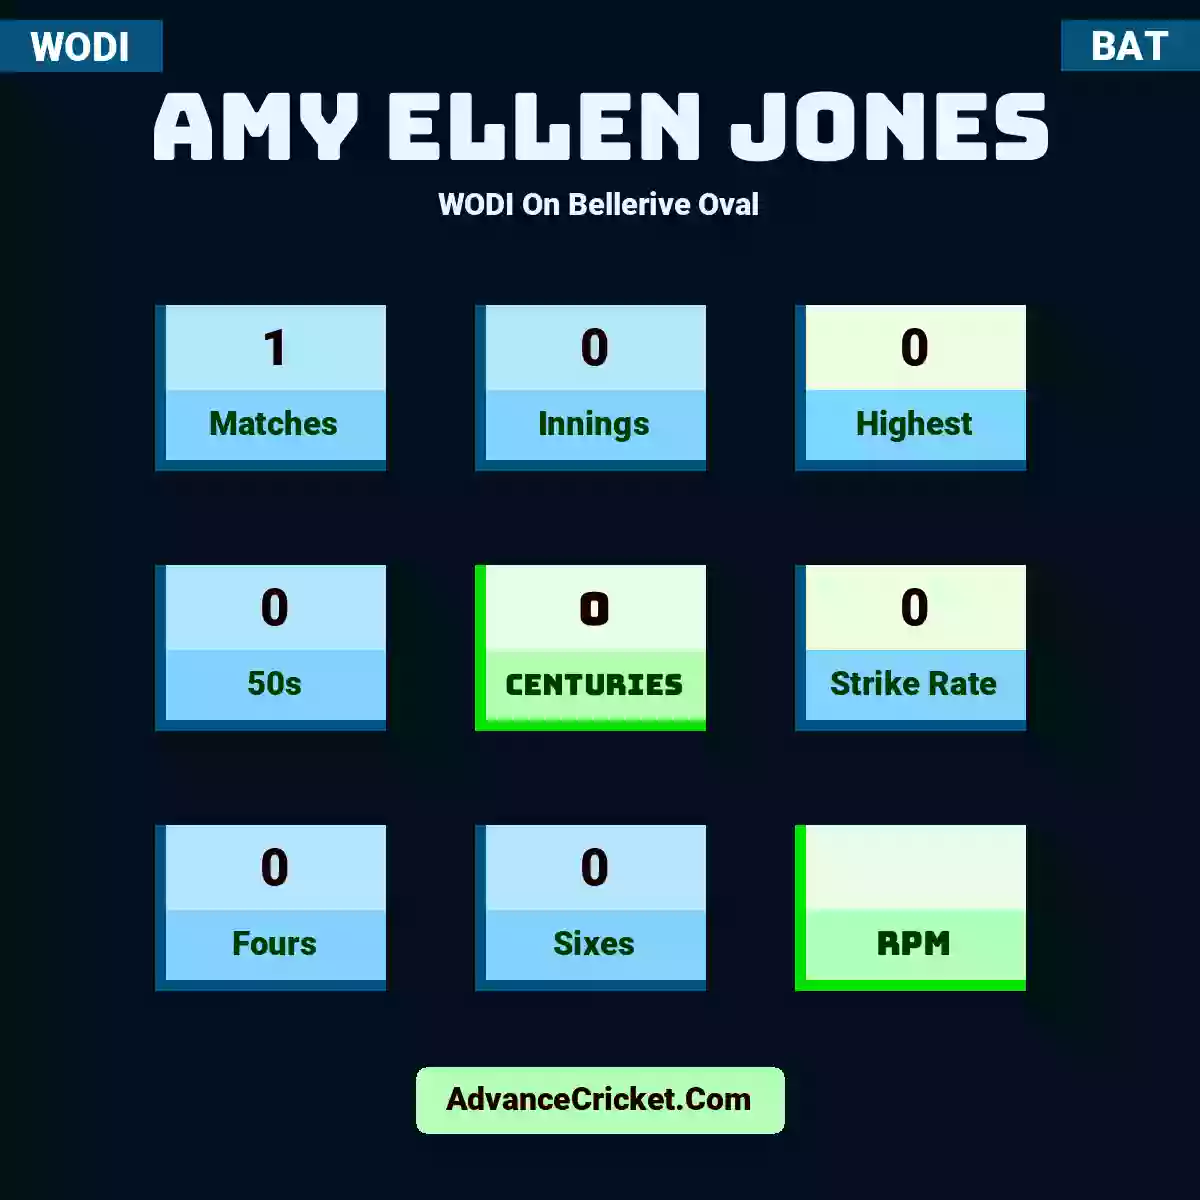 Amy Ellen Jones WODI  On Bellerive Oval, Amy Ellen Jones played 1 matches, scored 0 runs as highest, 0 half-centuries, and 0 centuries, with a strike rate of 0. A.Jones hit 0 fours and 0 sixes.